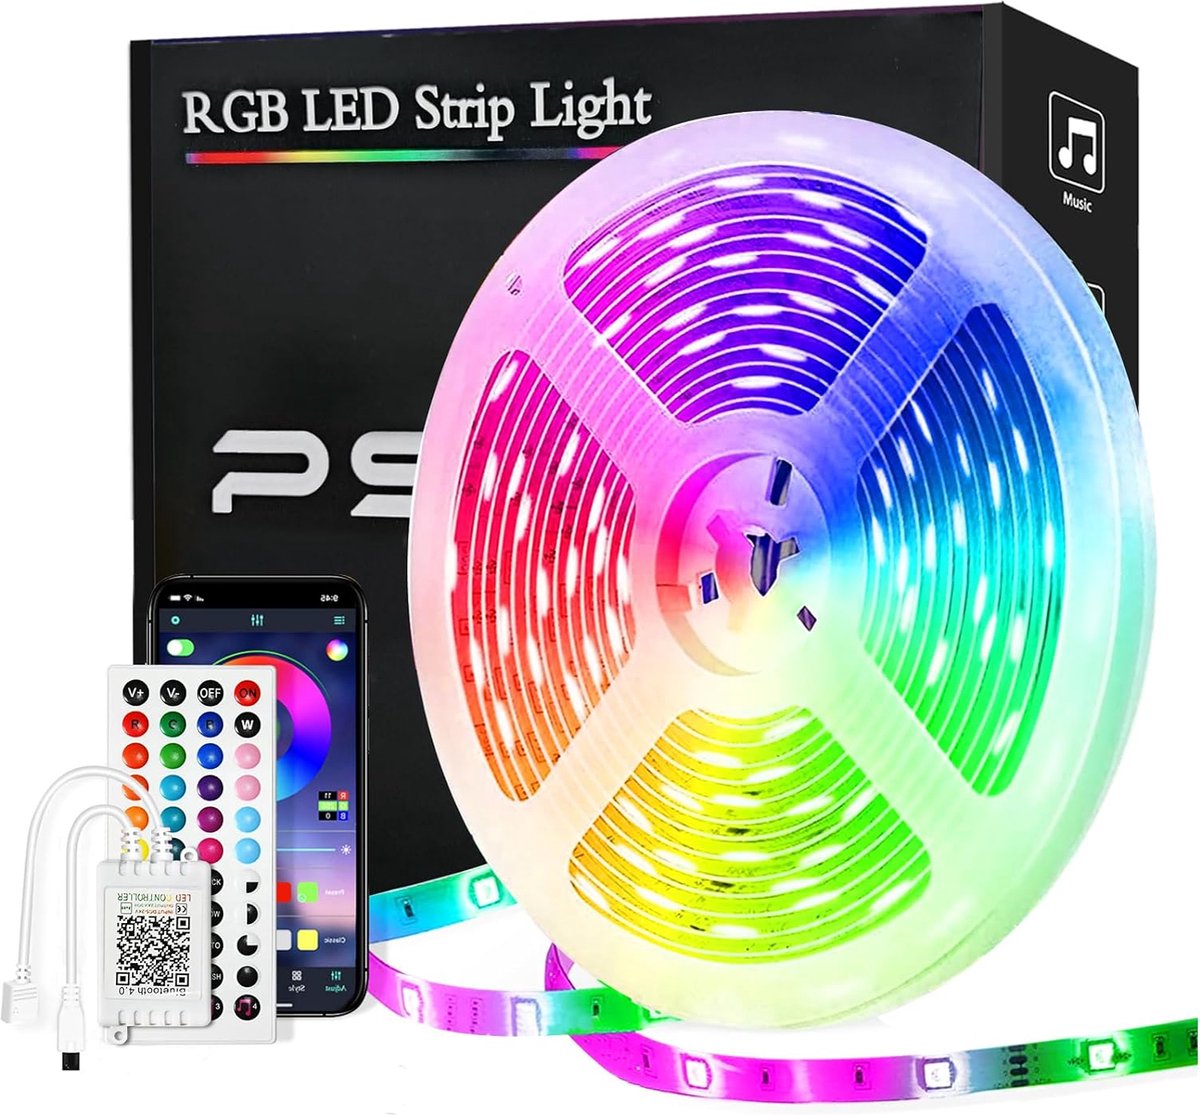 TV Achtergrondverlichting LED Strip - RGB Kleuren - Afstandsbediening - Sfeerverlichting voor Slaapkamer, Woonkamer, en Home Theater